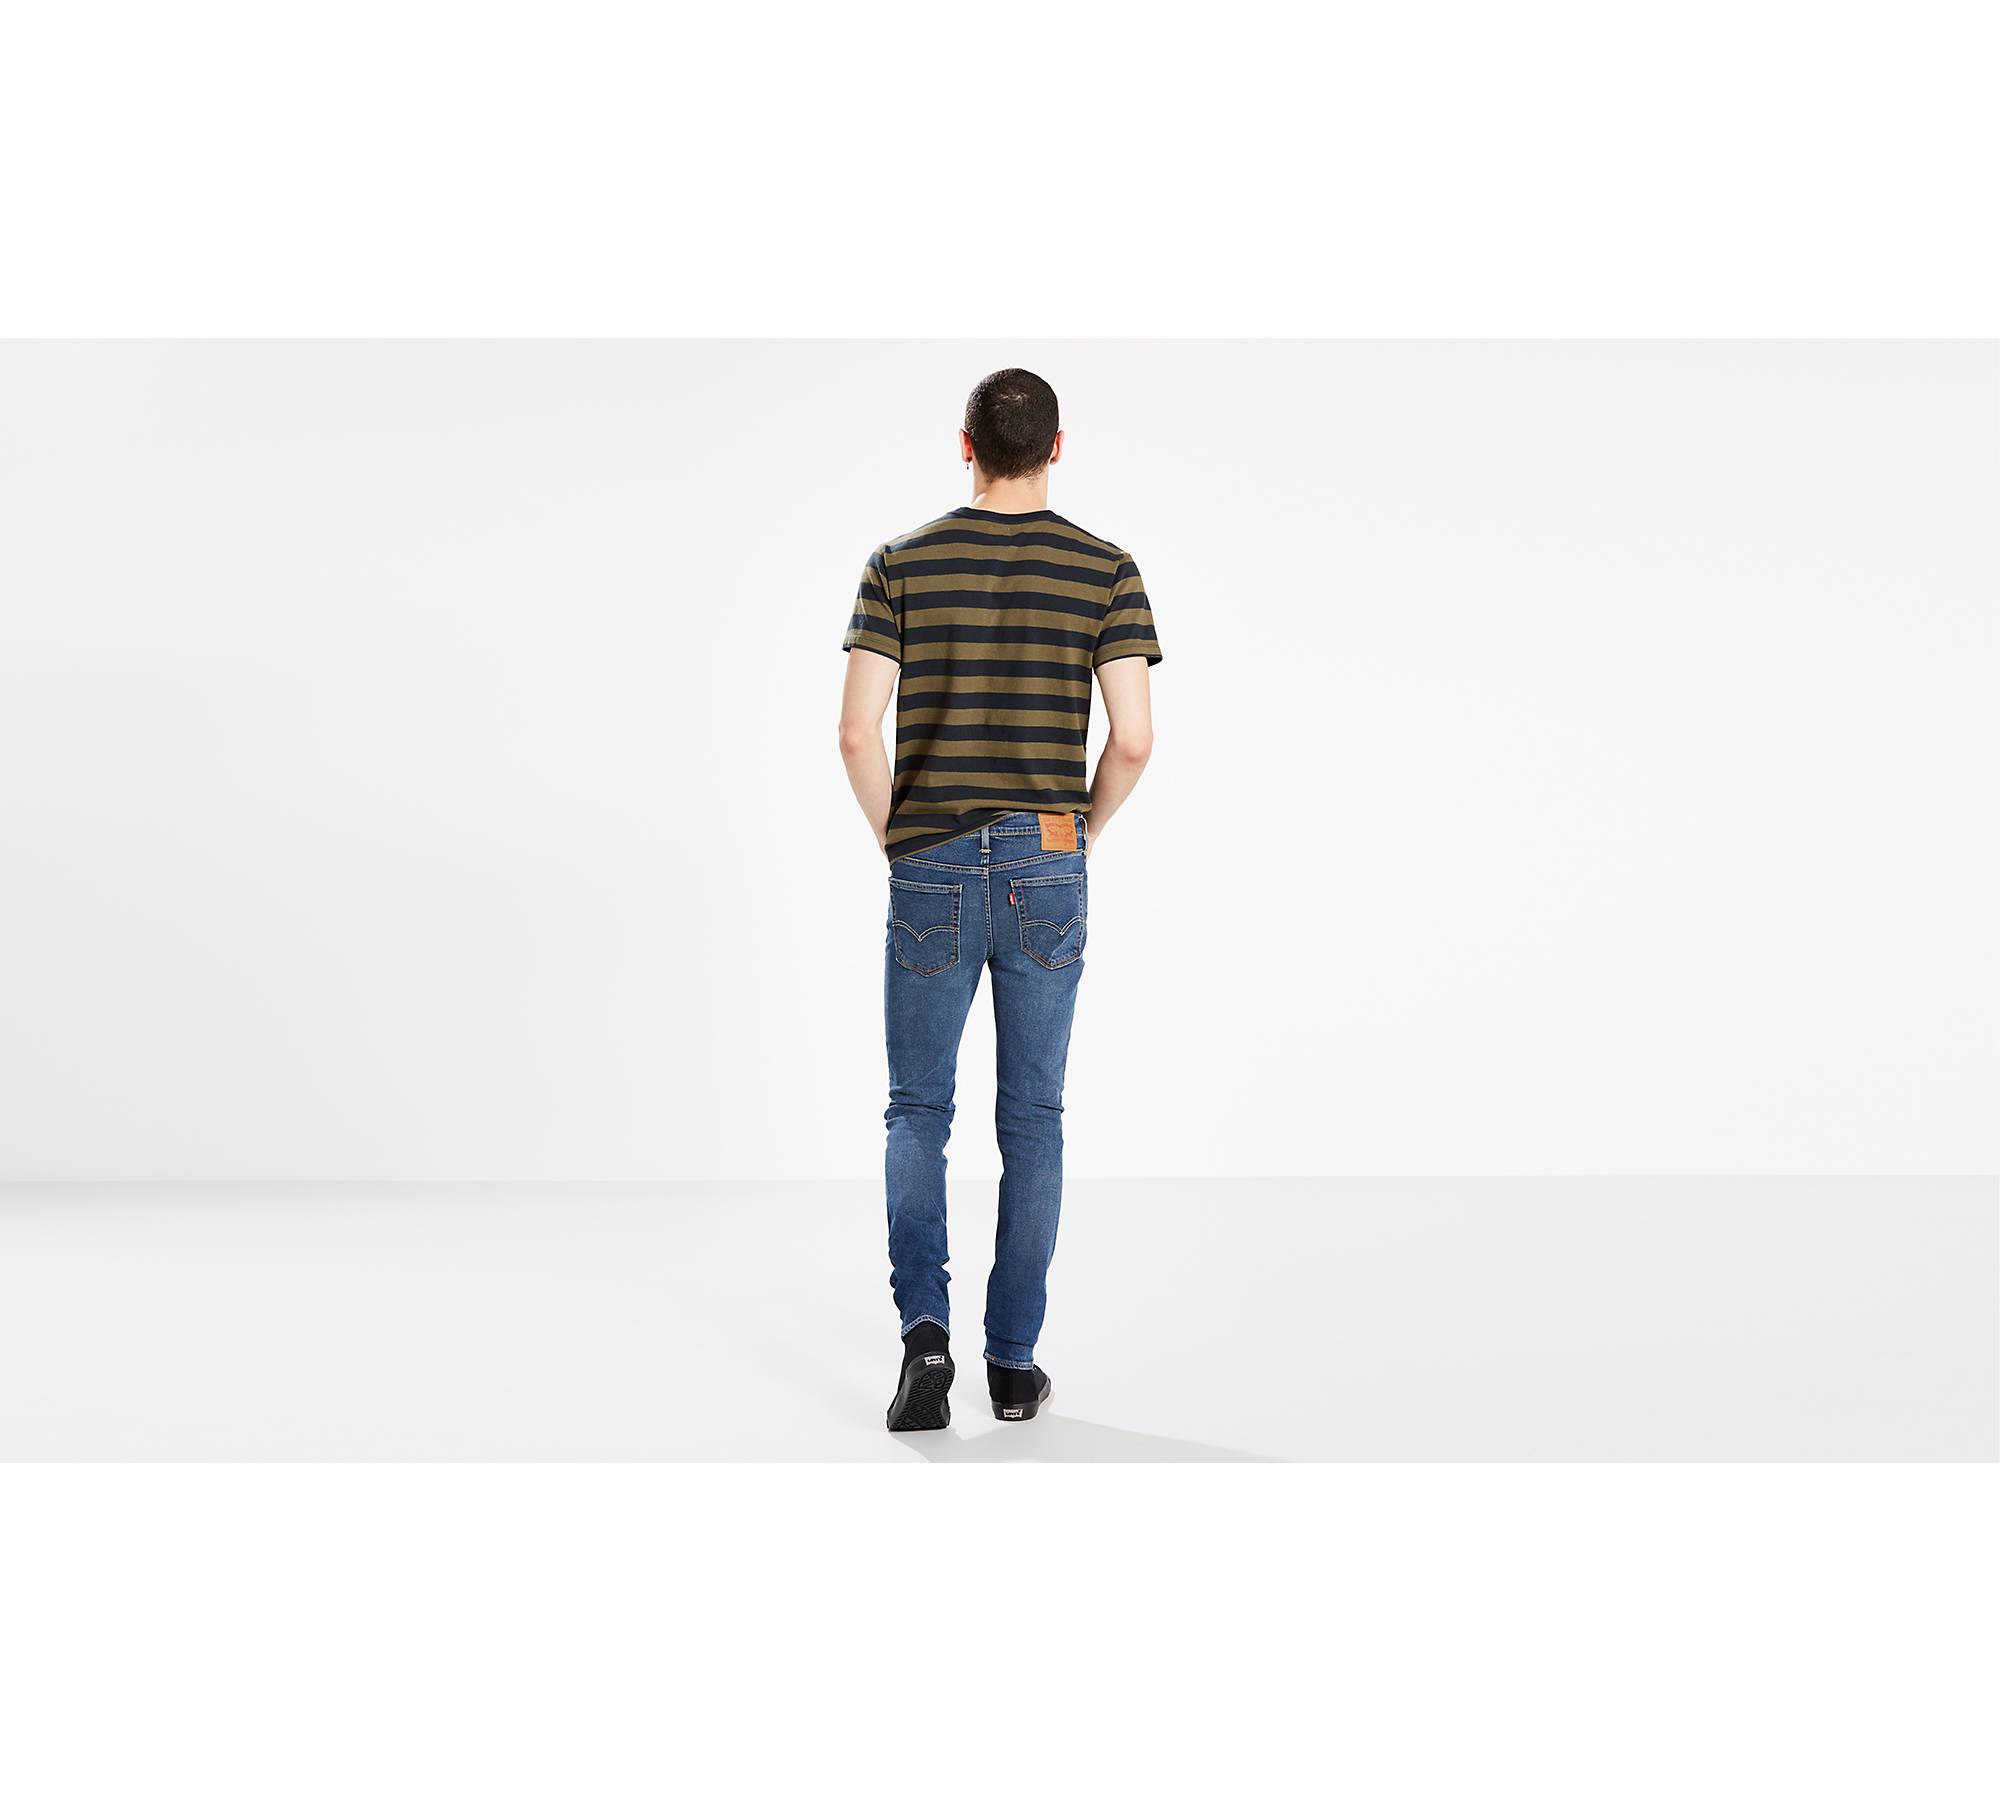 519™ Extreme Skinny Men's Jeans - Dark Wash | Levi's® US